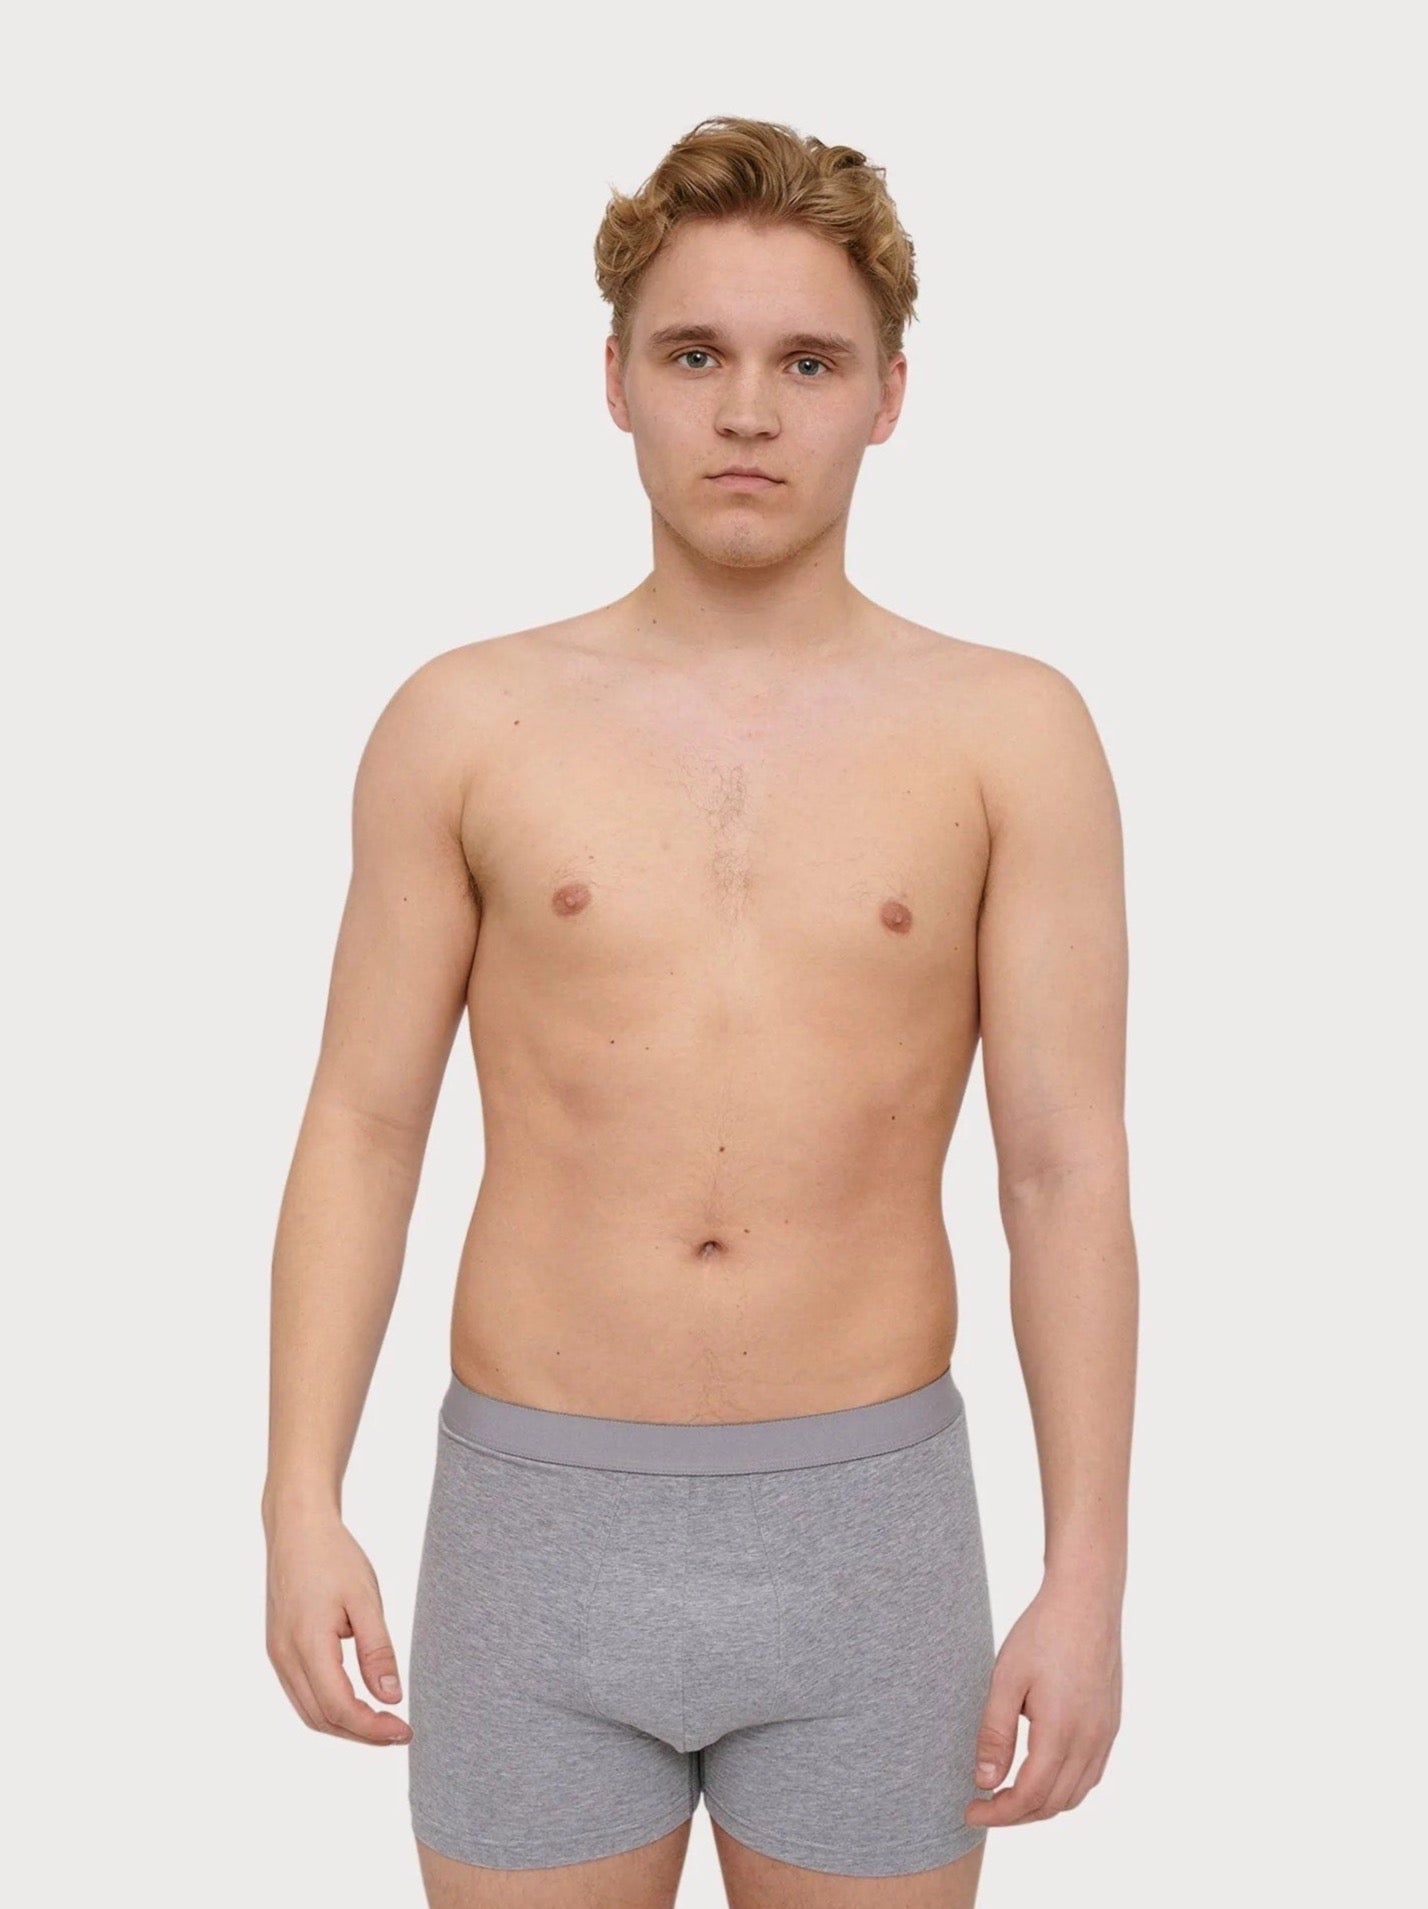 A young man in Organic Basics' Boxers - Organic Cotton (2-pack) - Grey Melange.